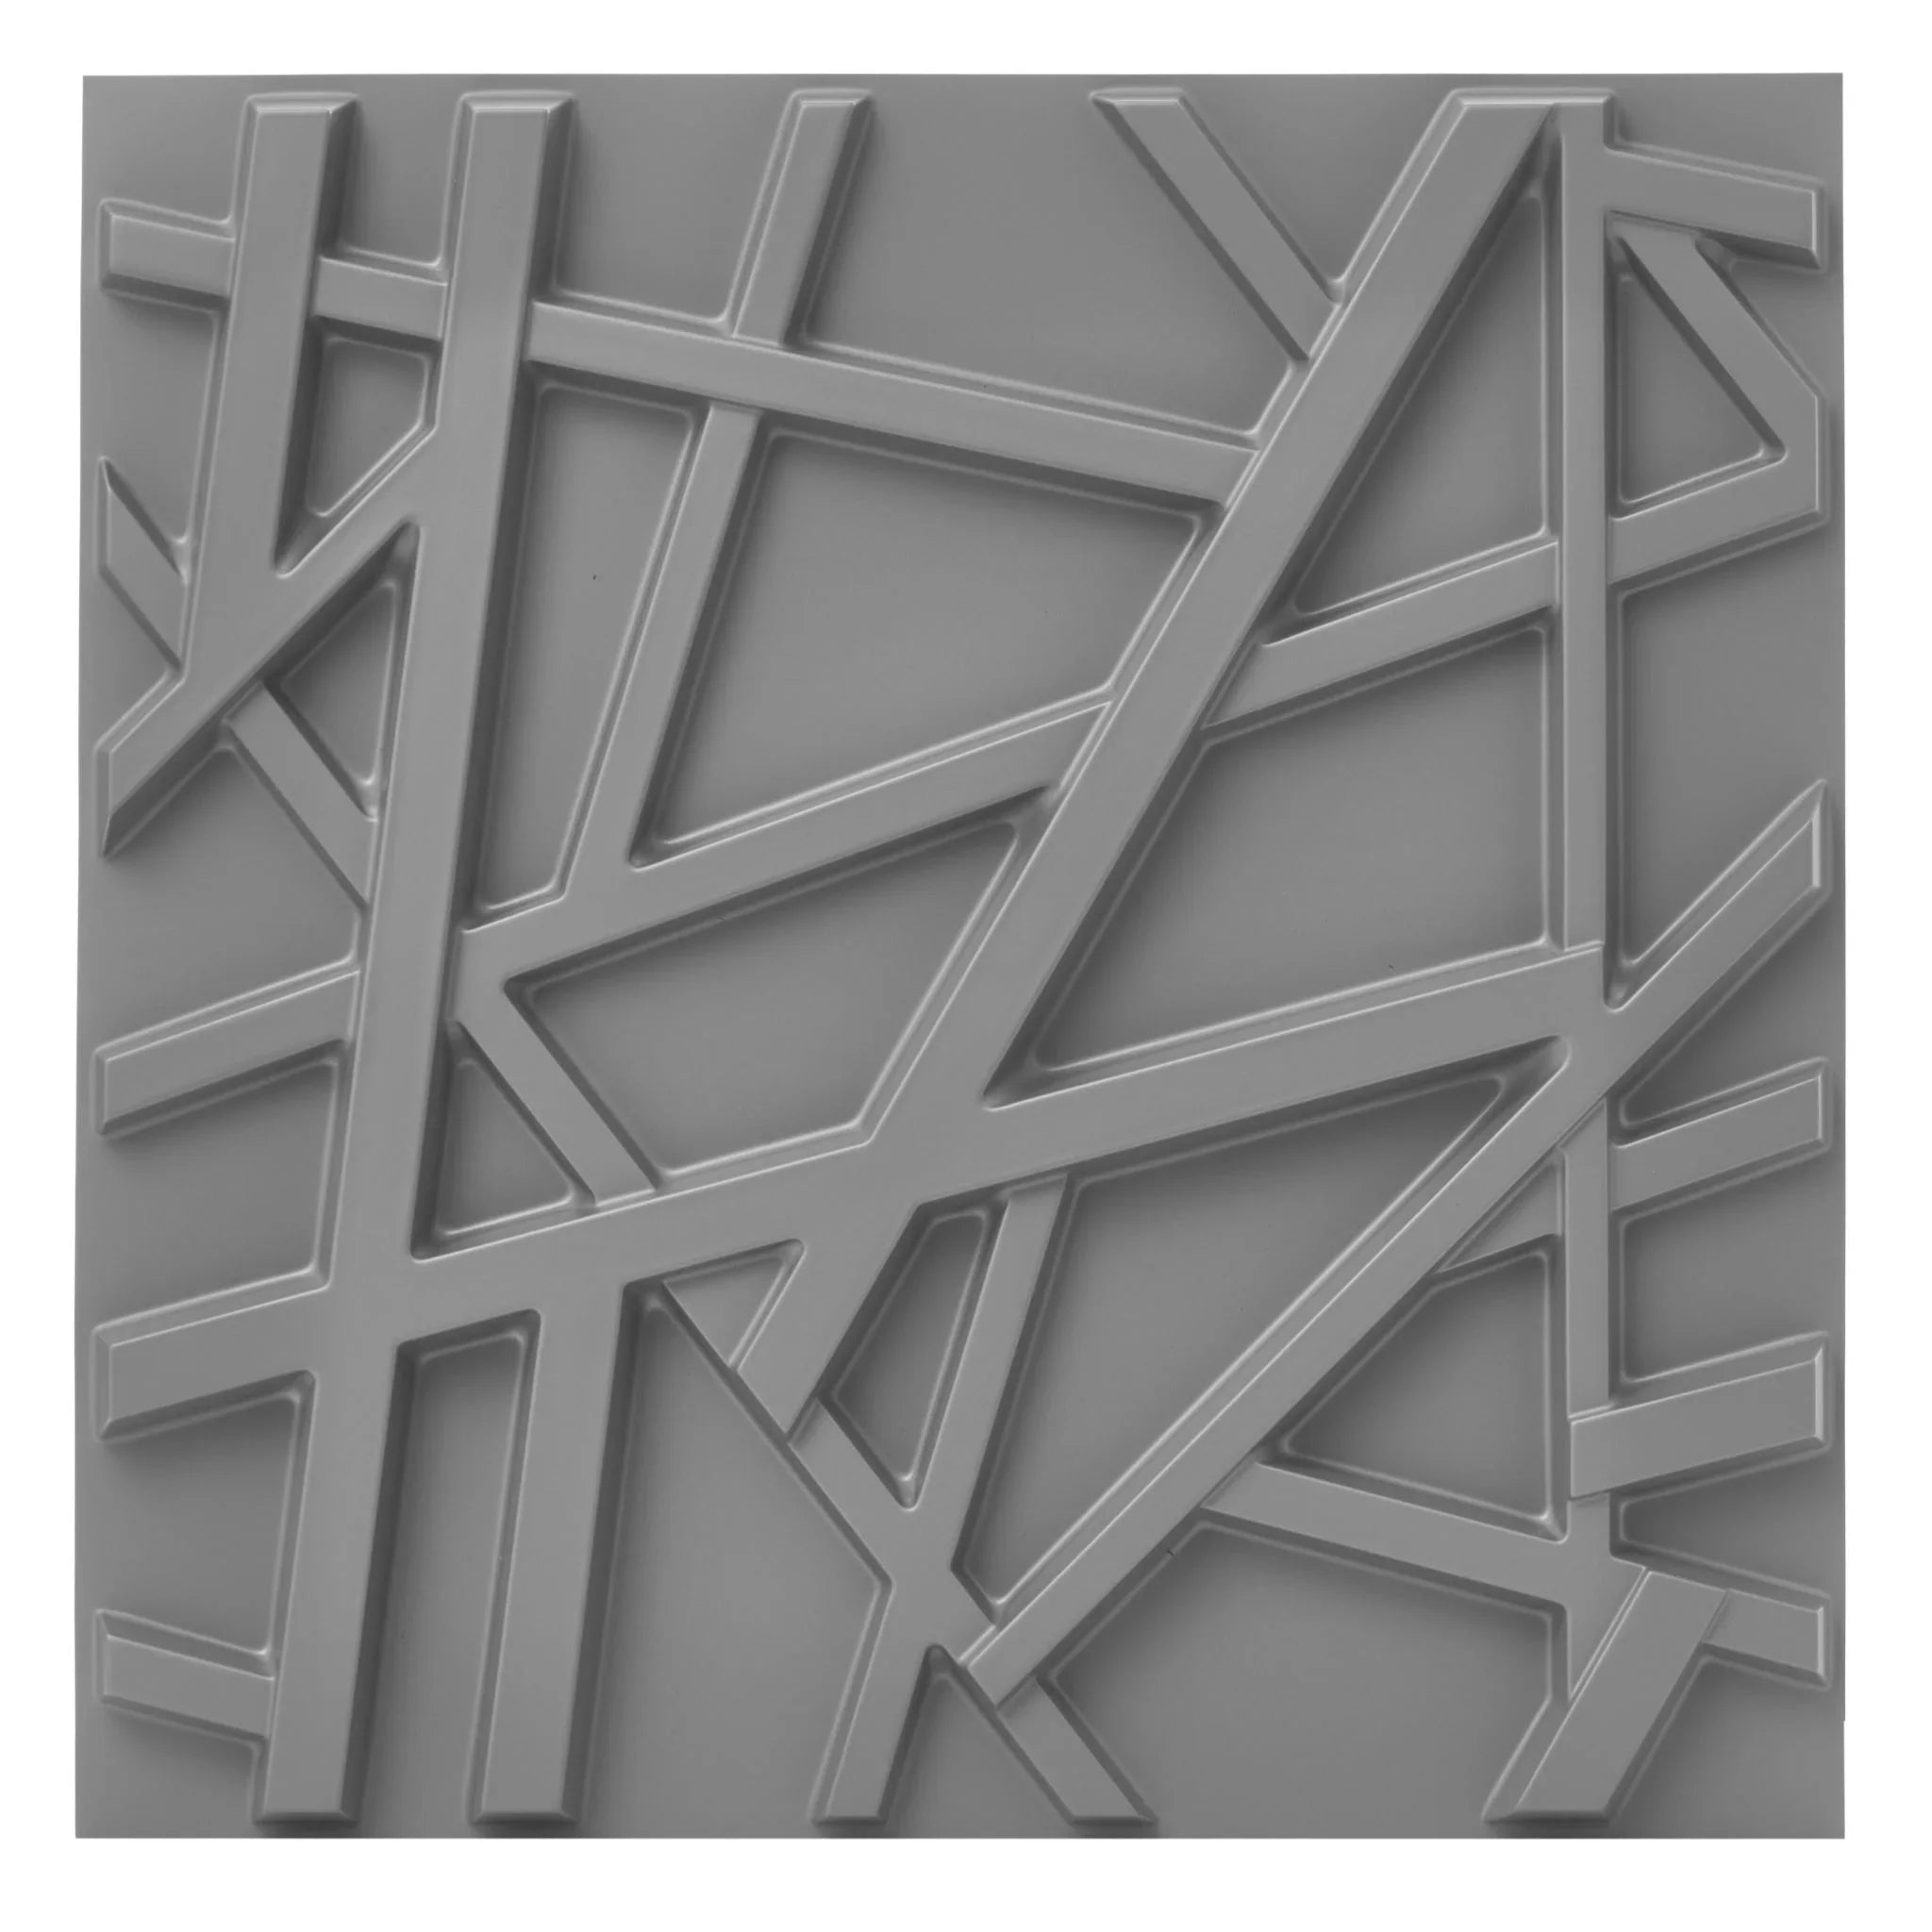 Detail view of grey PVC wall panel showcasing crisscross design